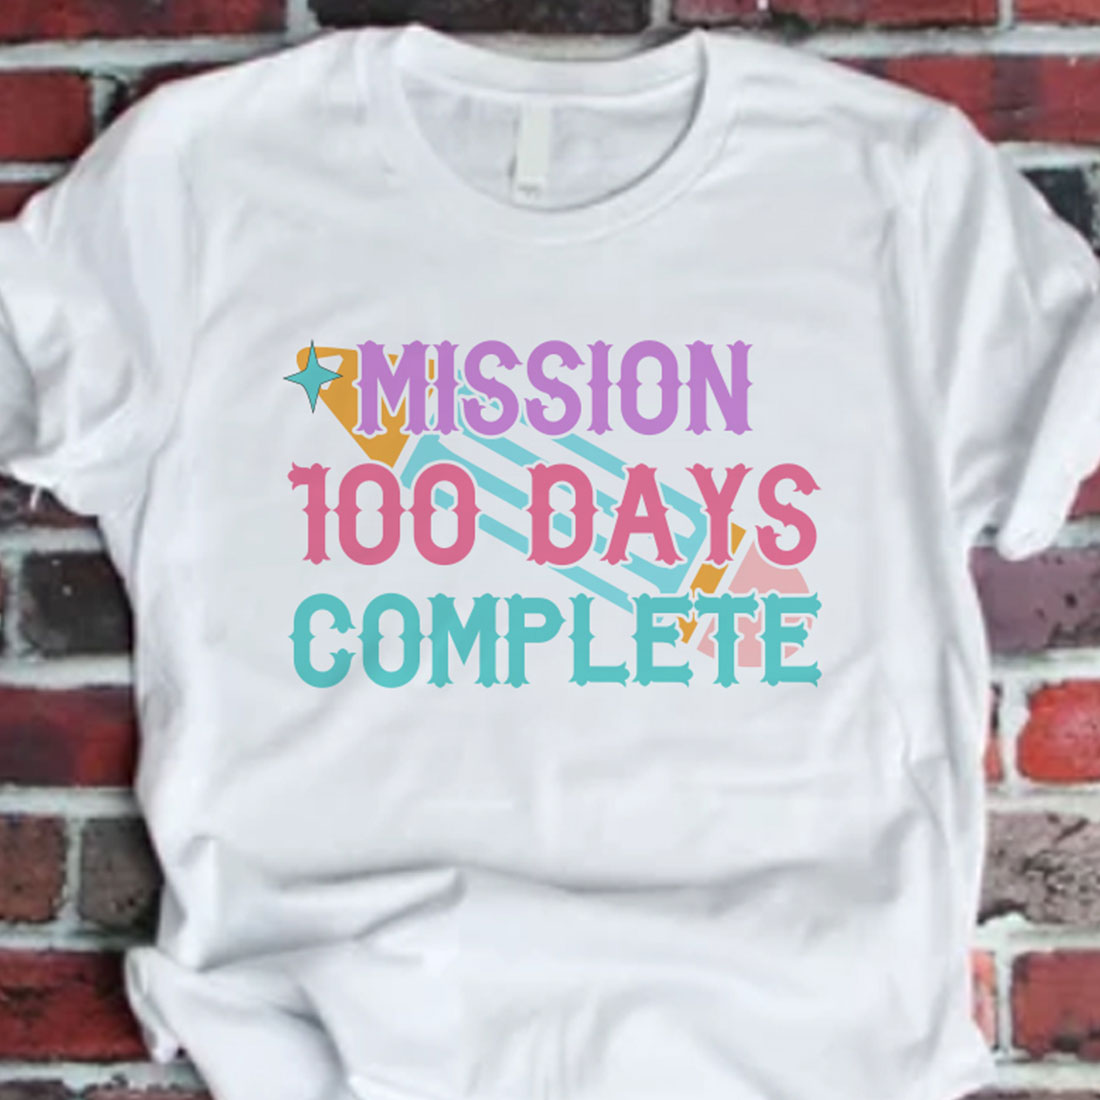 T-shirt 100 Days of School Bundle cover image.